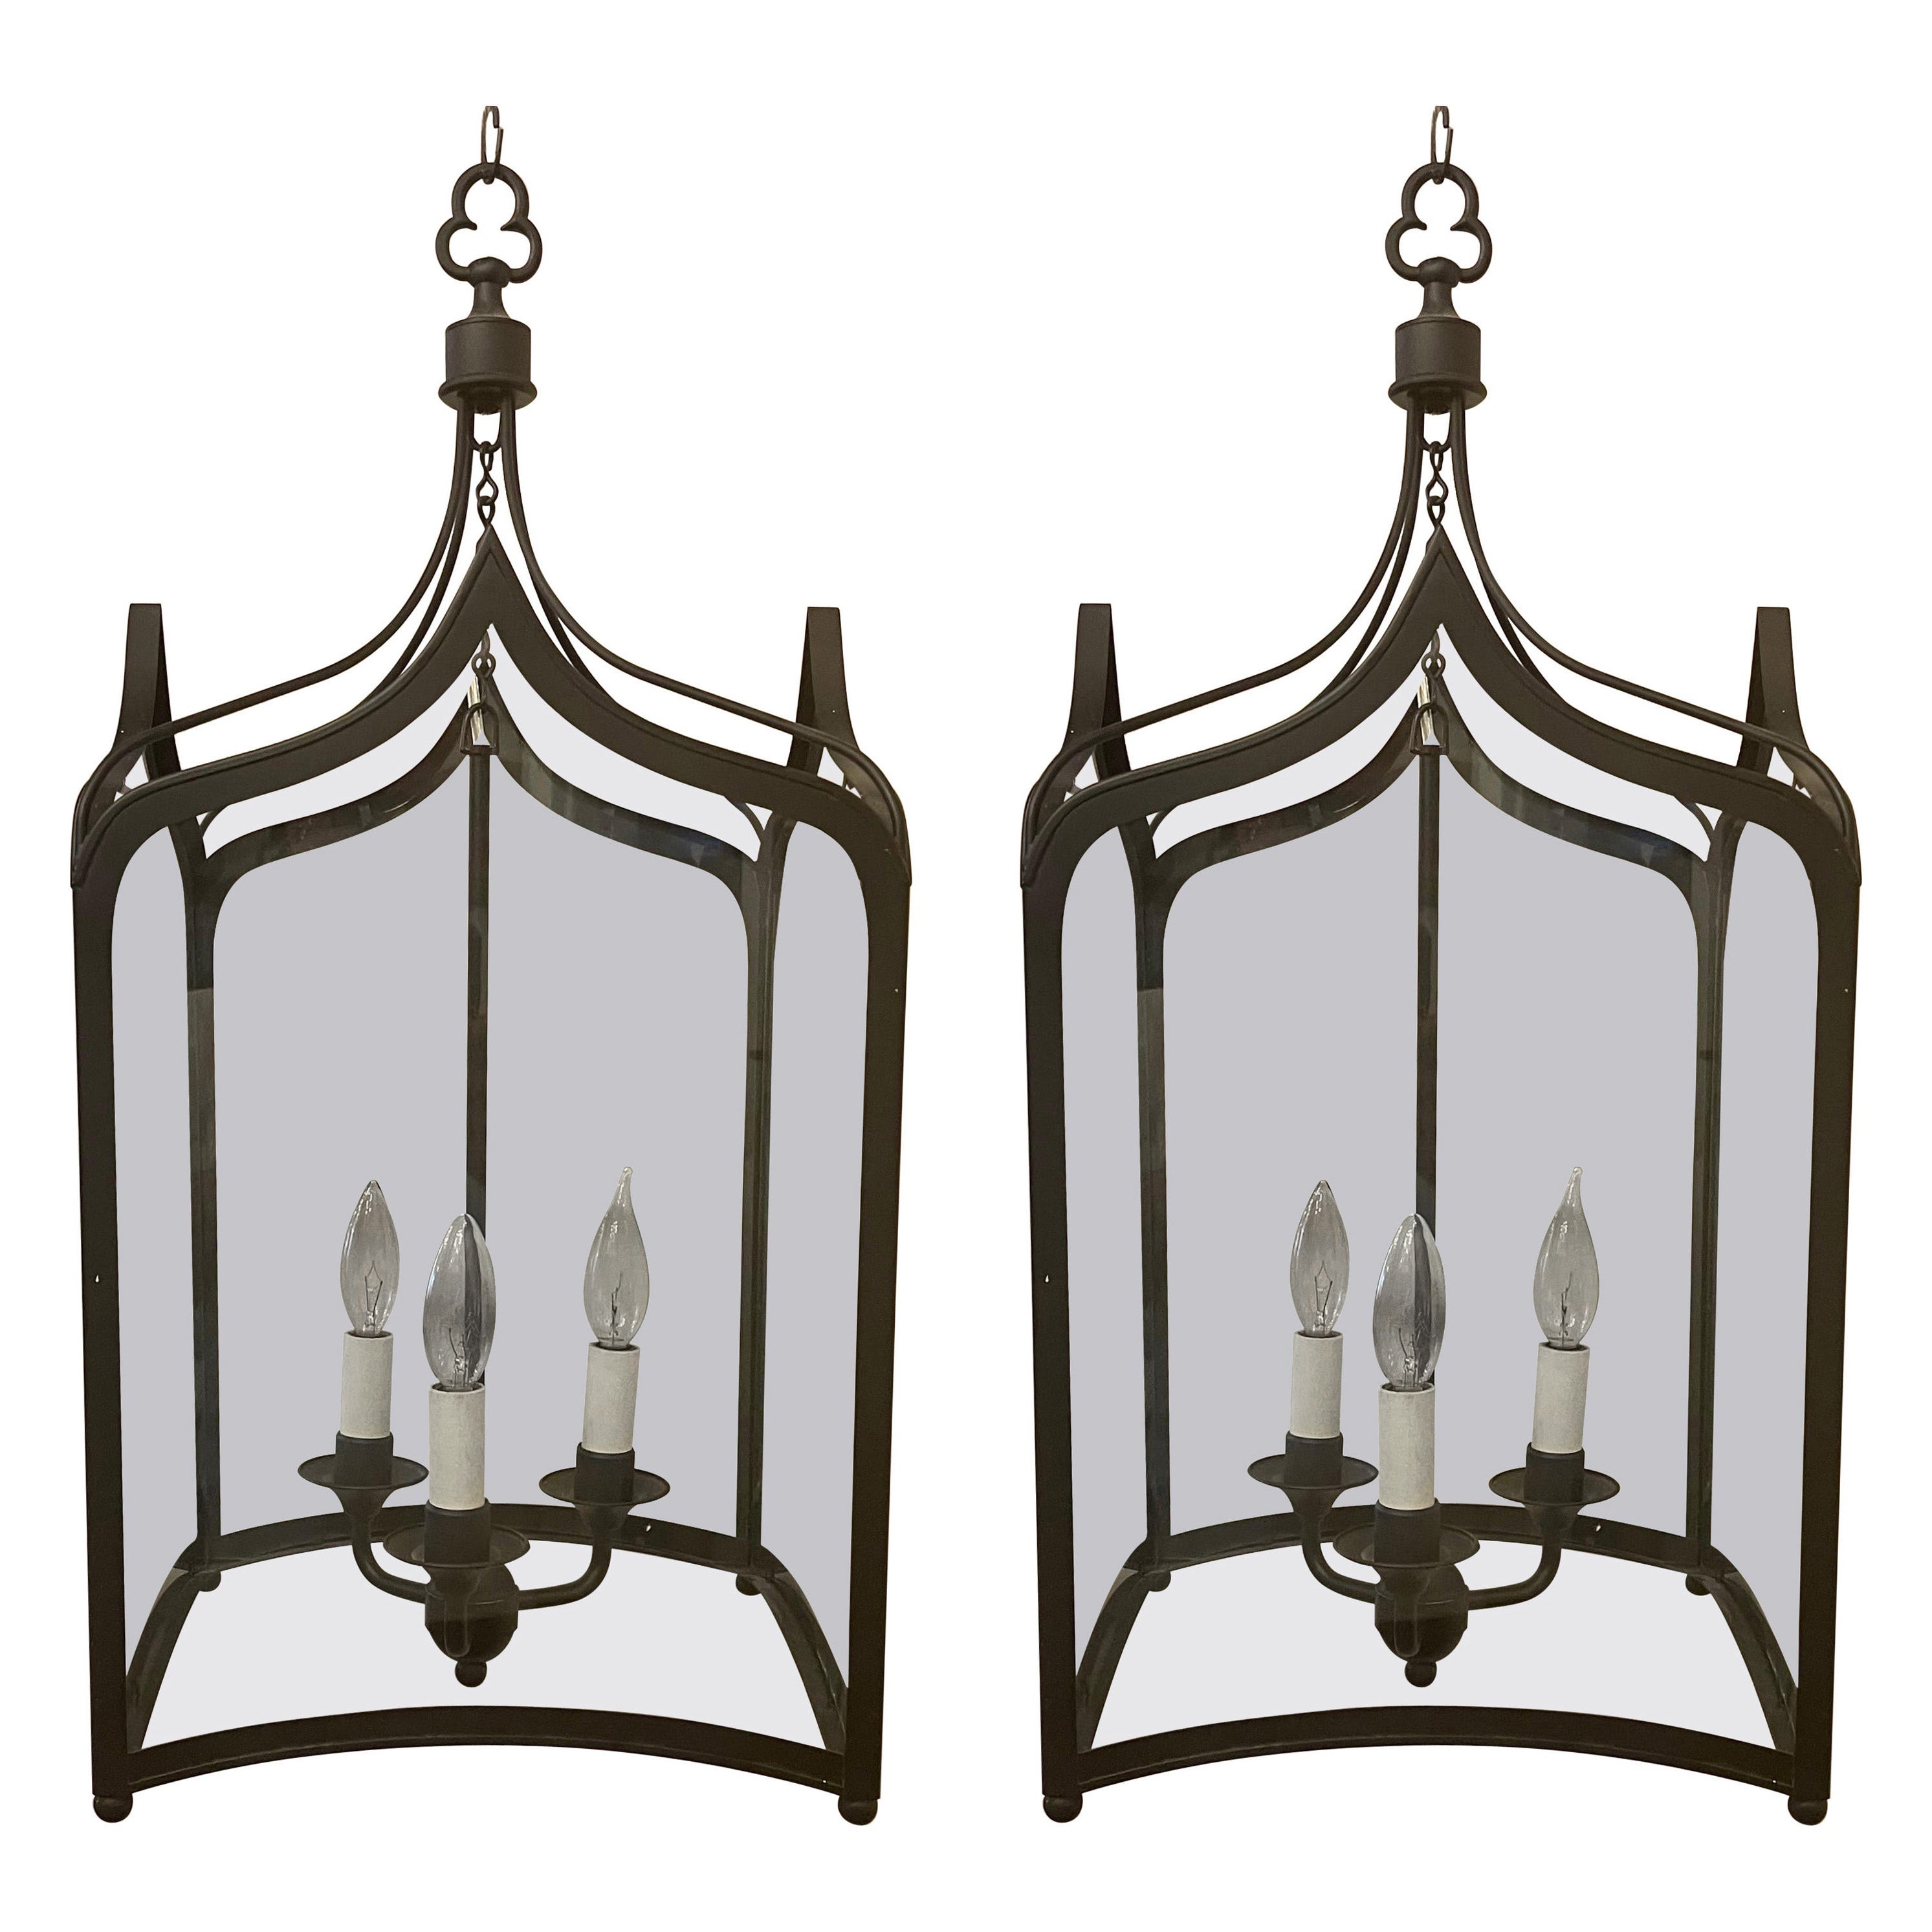 Wonderful Vaughan Lighting Regency Square Arched Black Iron 3 Lanterns Fixtures